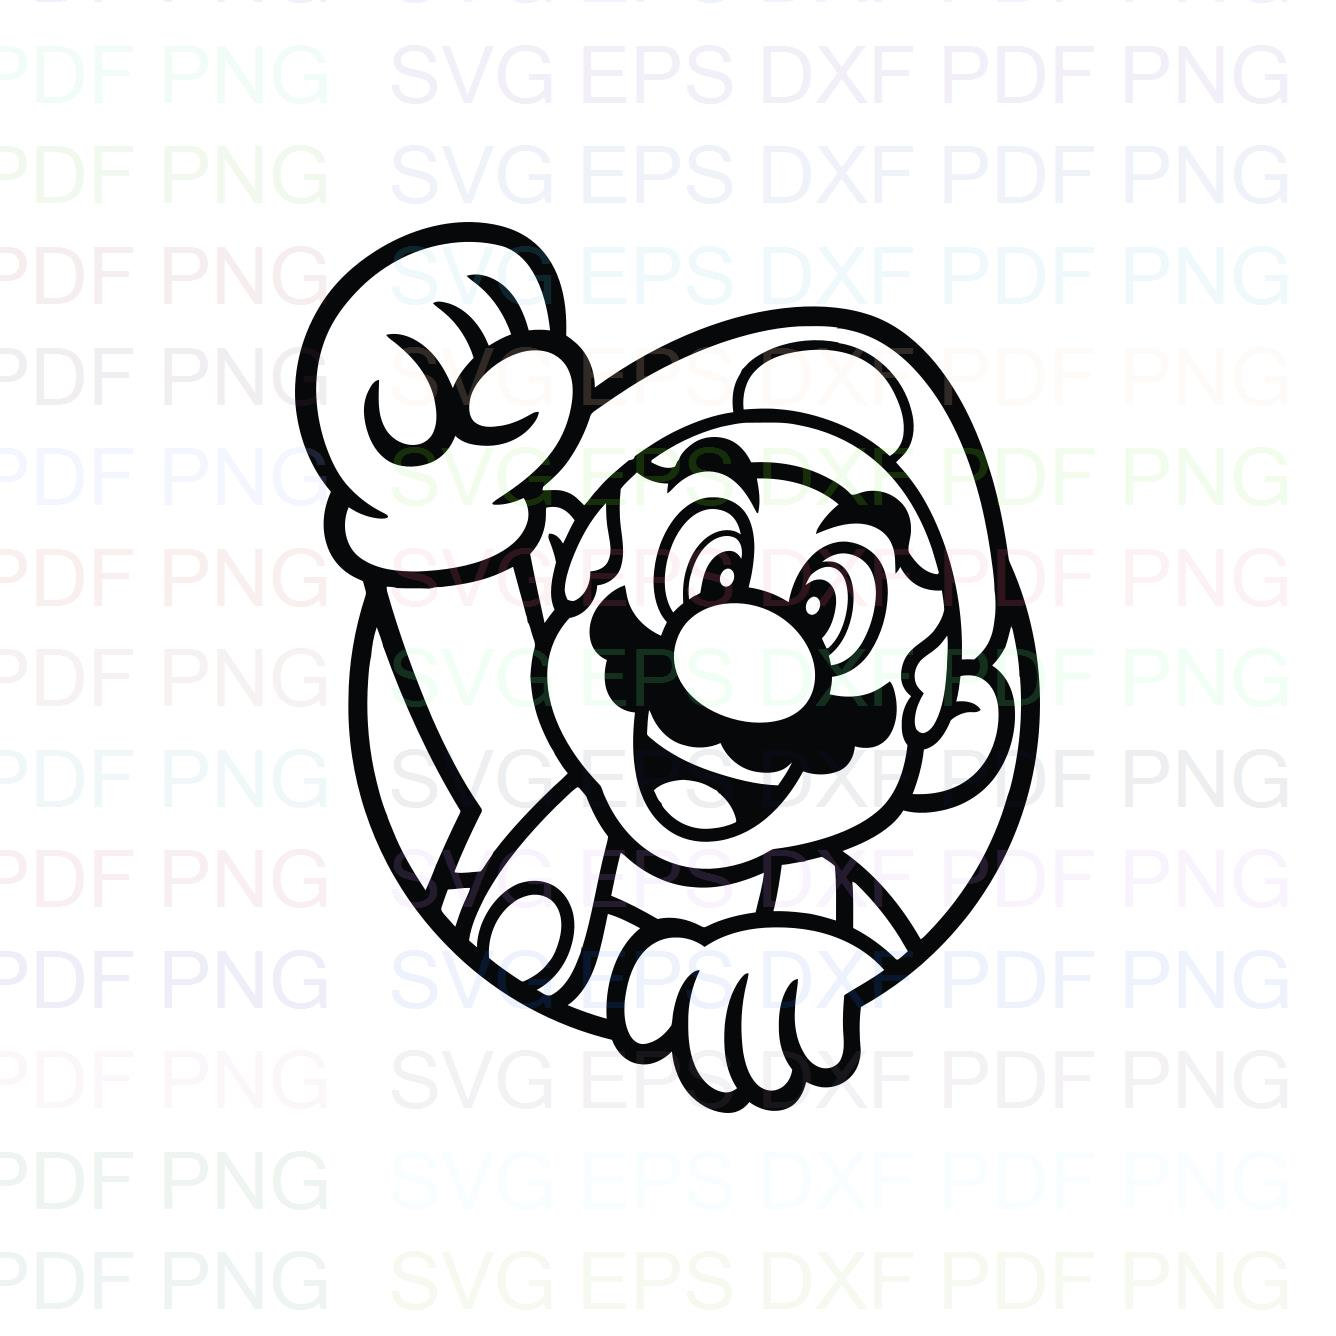 Super Mario Bros Waving His Hand Through A Circle 2 Svg Dxf Eps Pdf Png Vector Clipart Cricut Cutting file